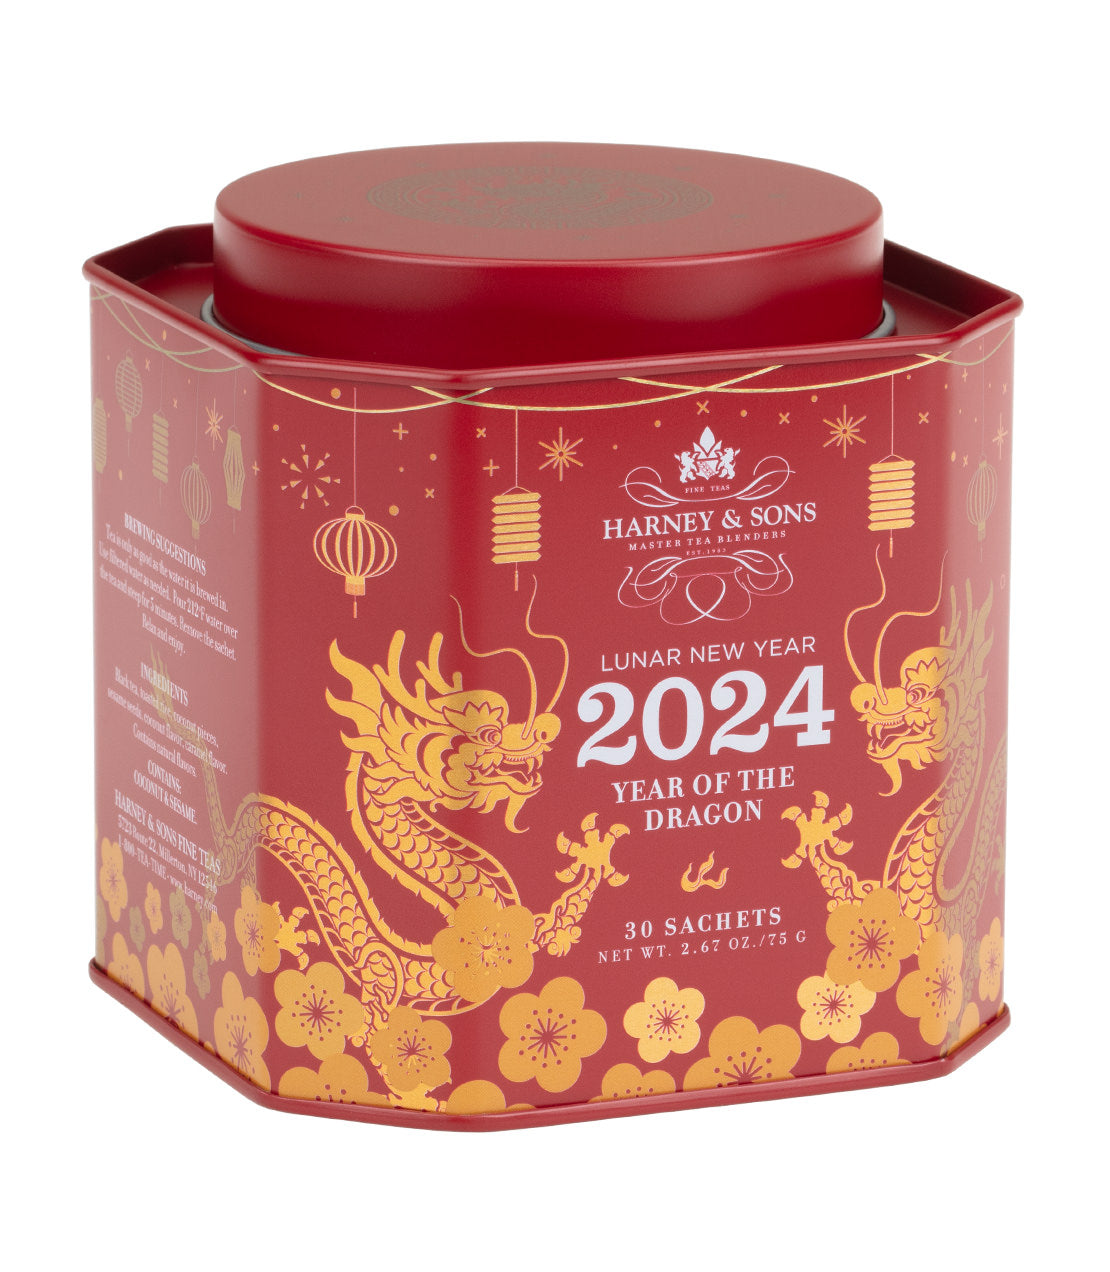 Lunar New Year 2024 – Year of the Dragon